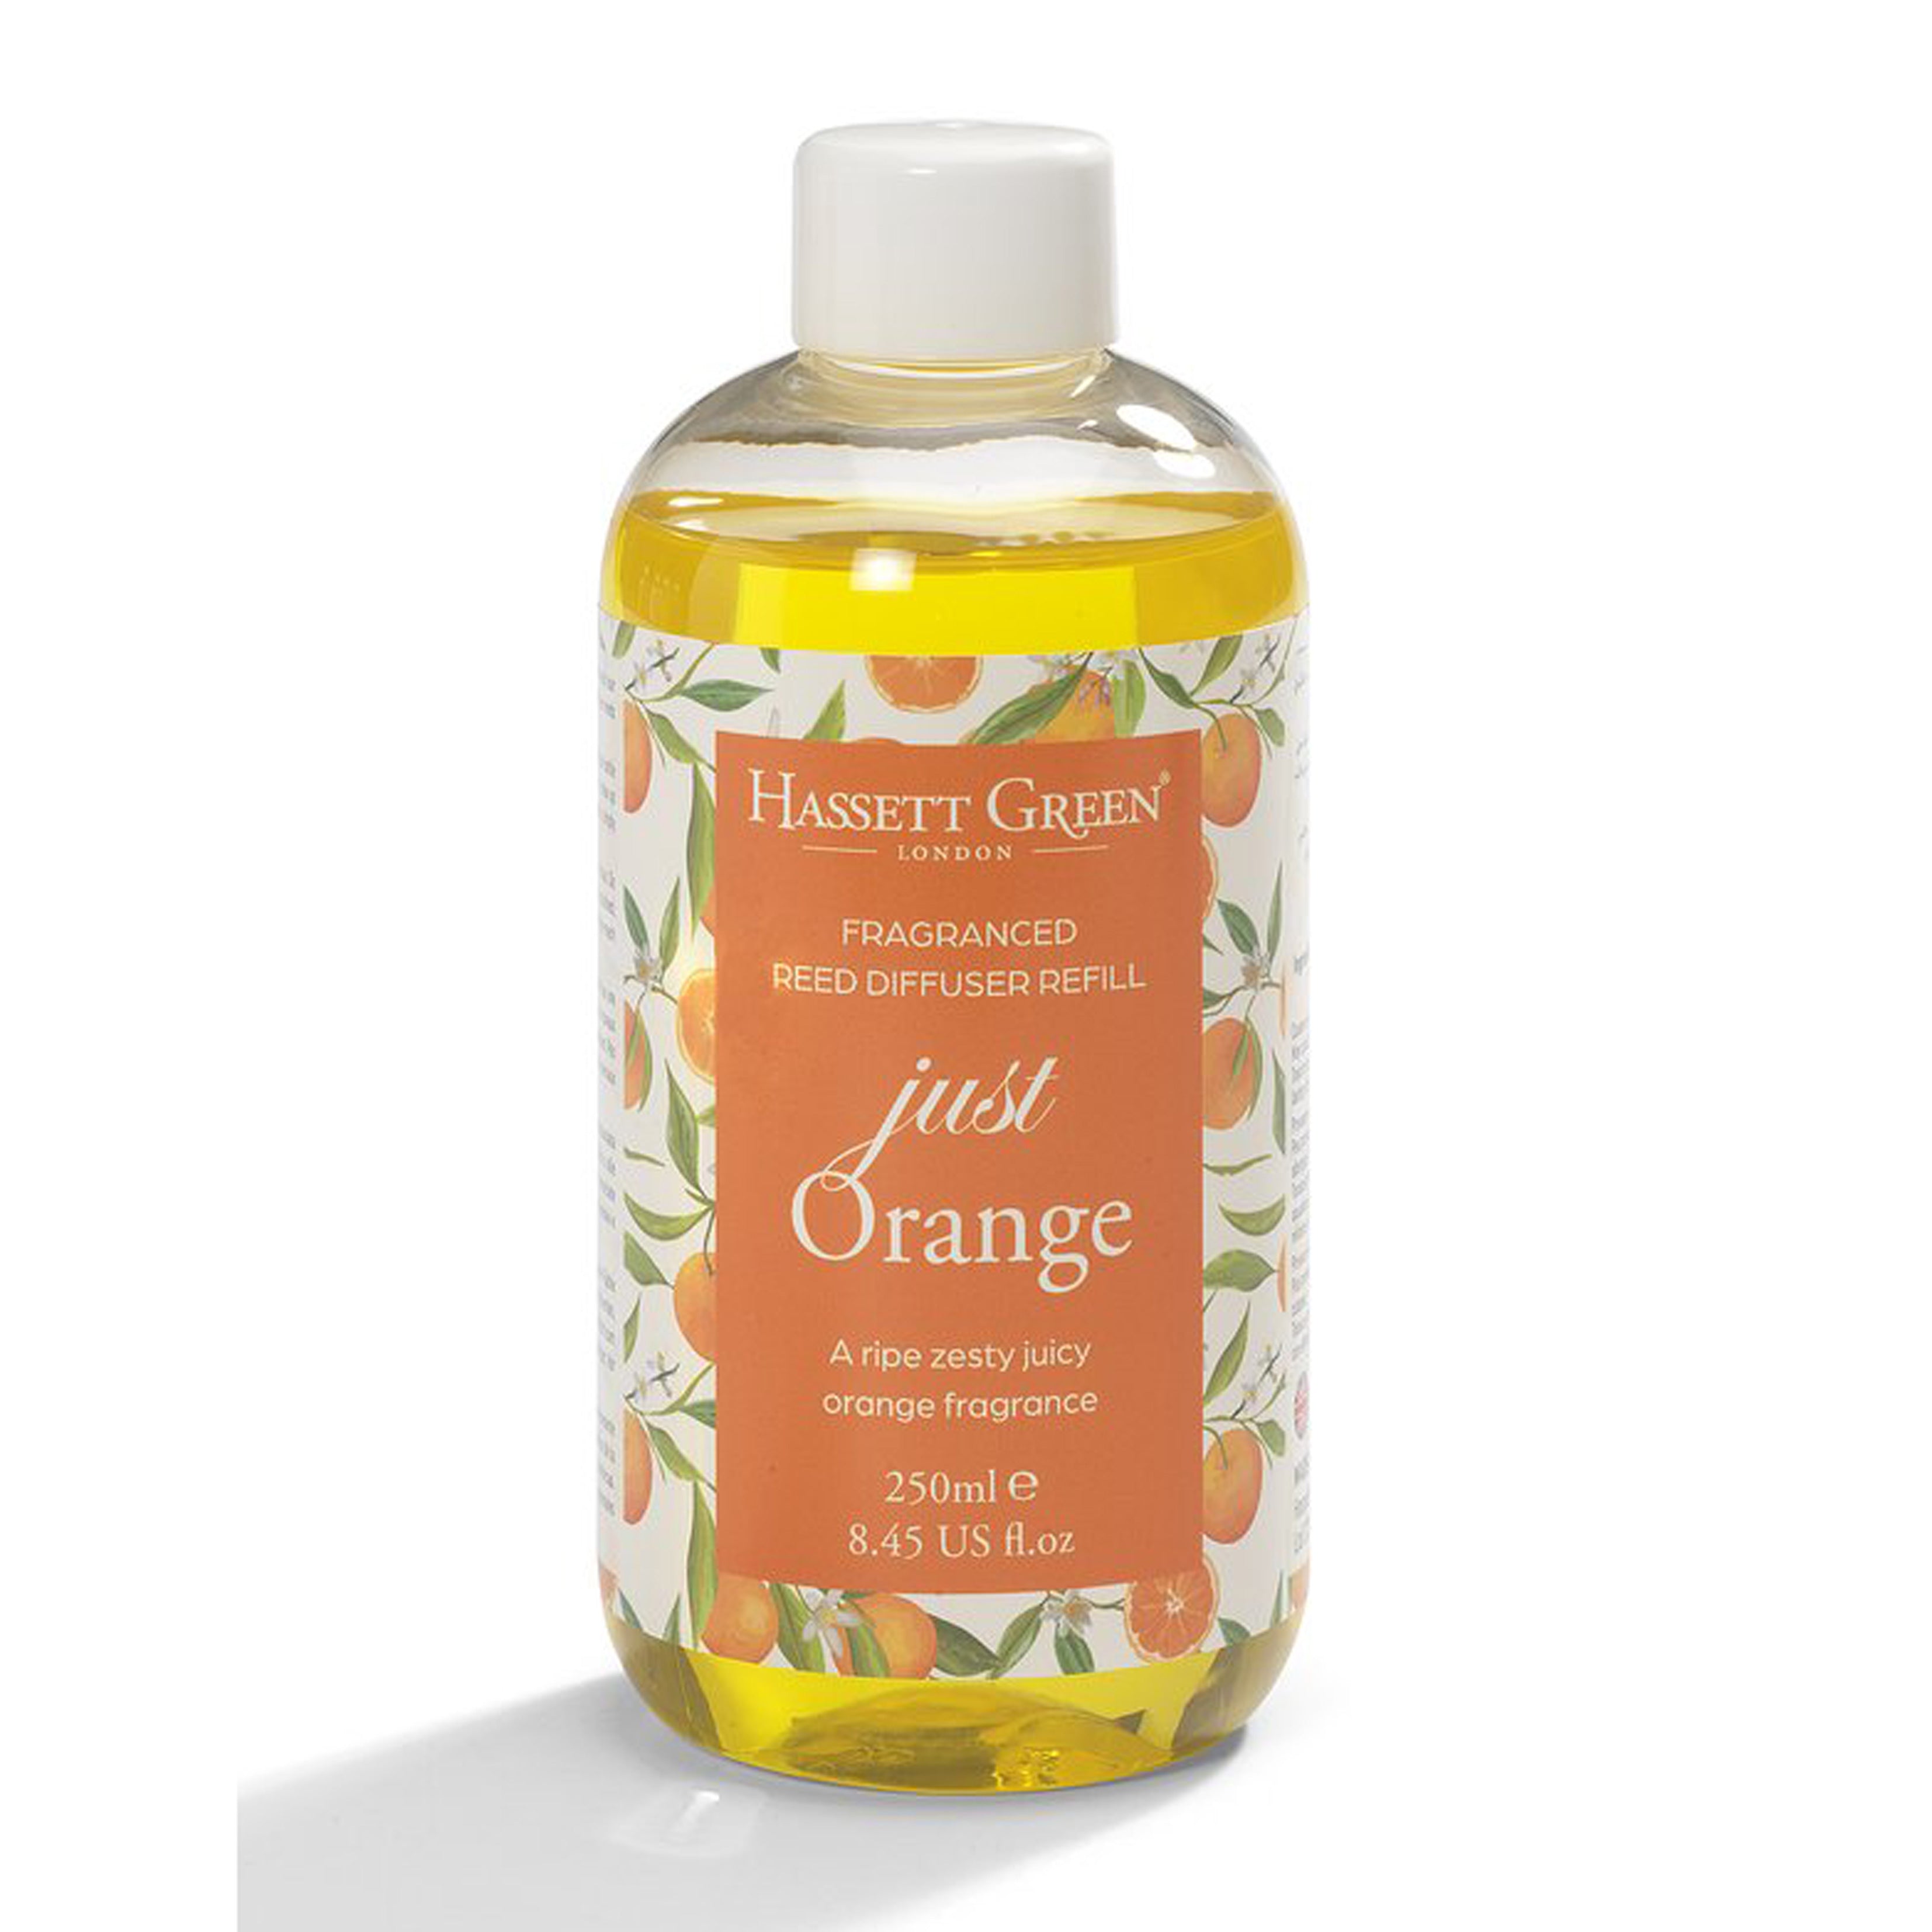 Just Orange - Fragrance Oil Diffuser Refill 250Ml